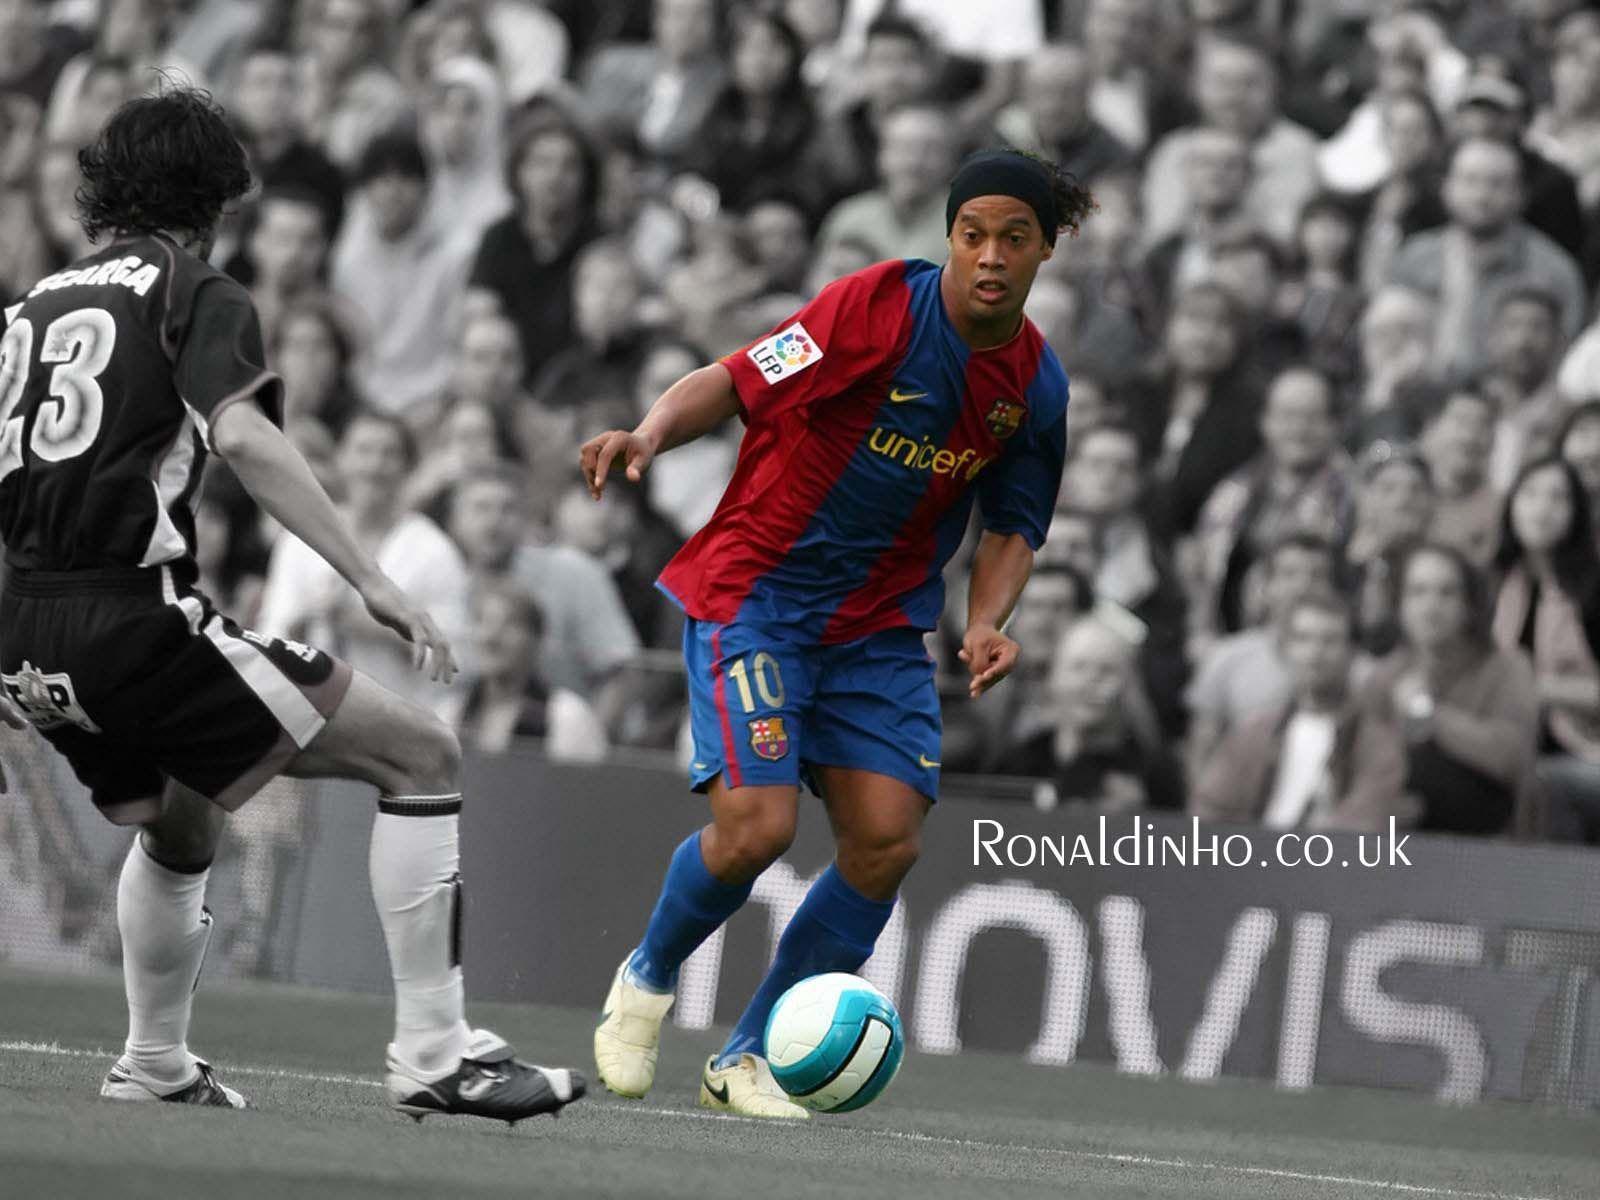 Photo - Ronaldinho One One